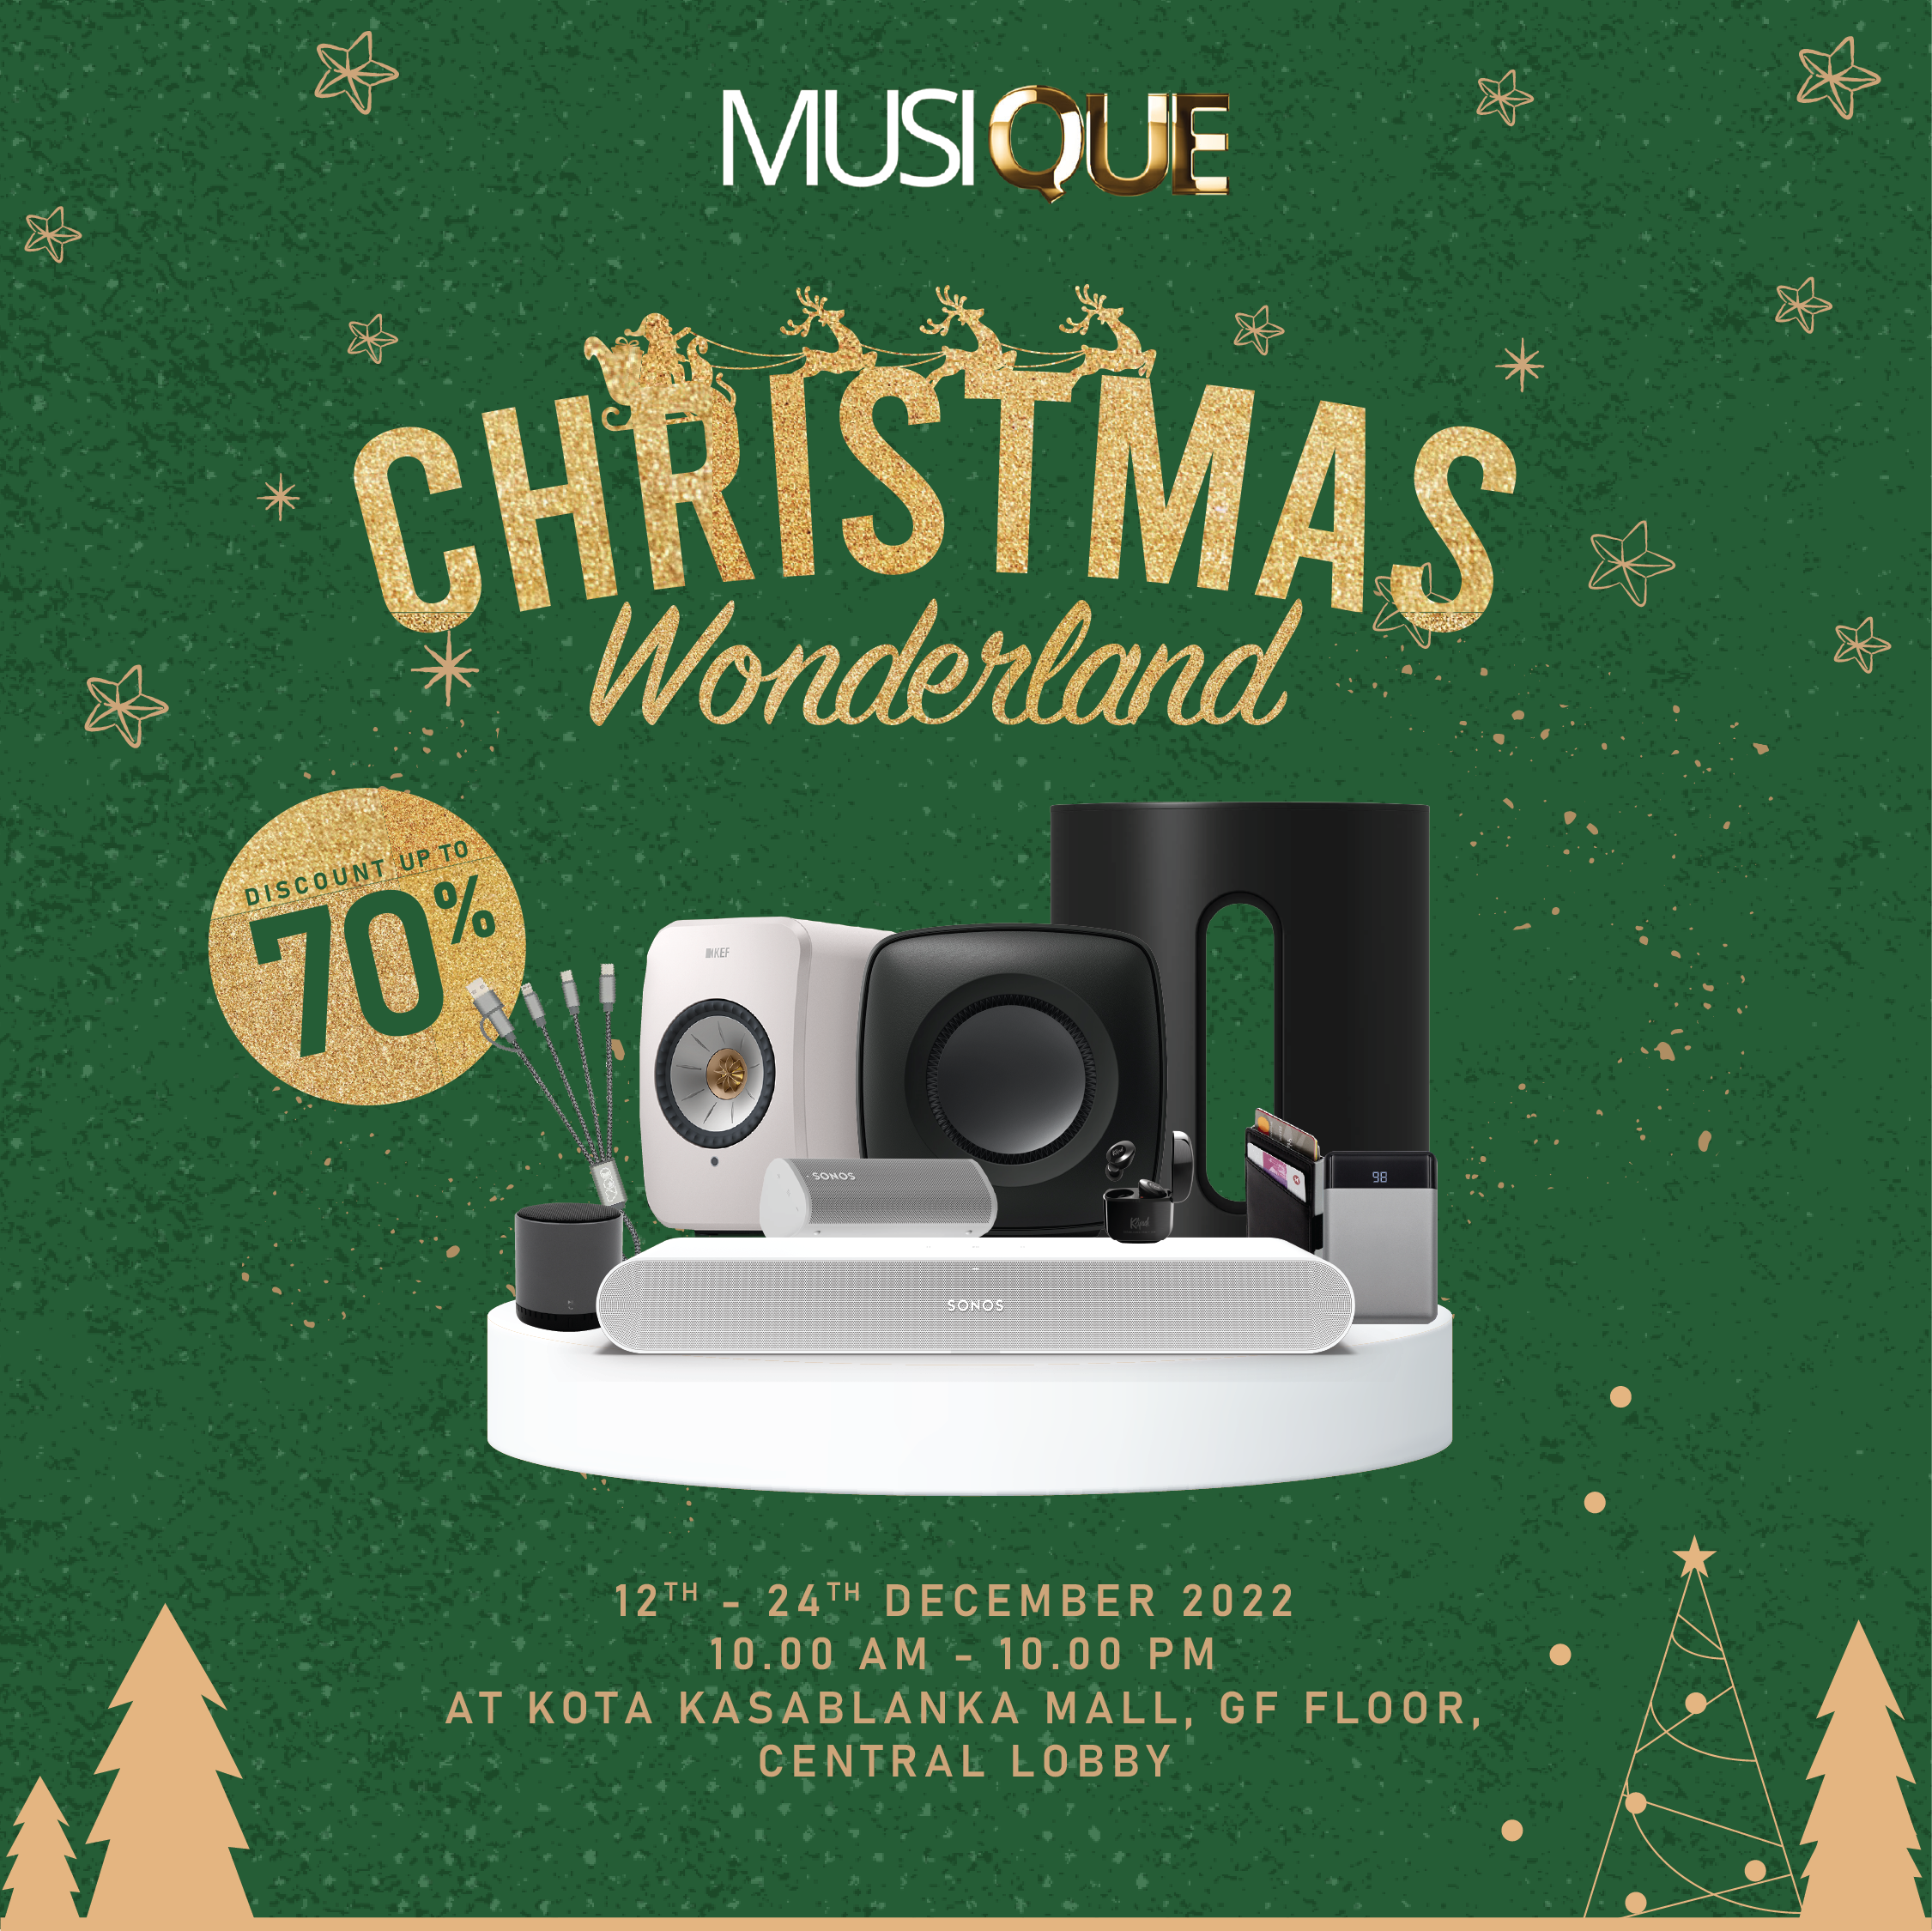 Musique Christmas Wonderland